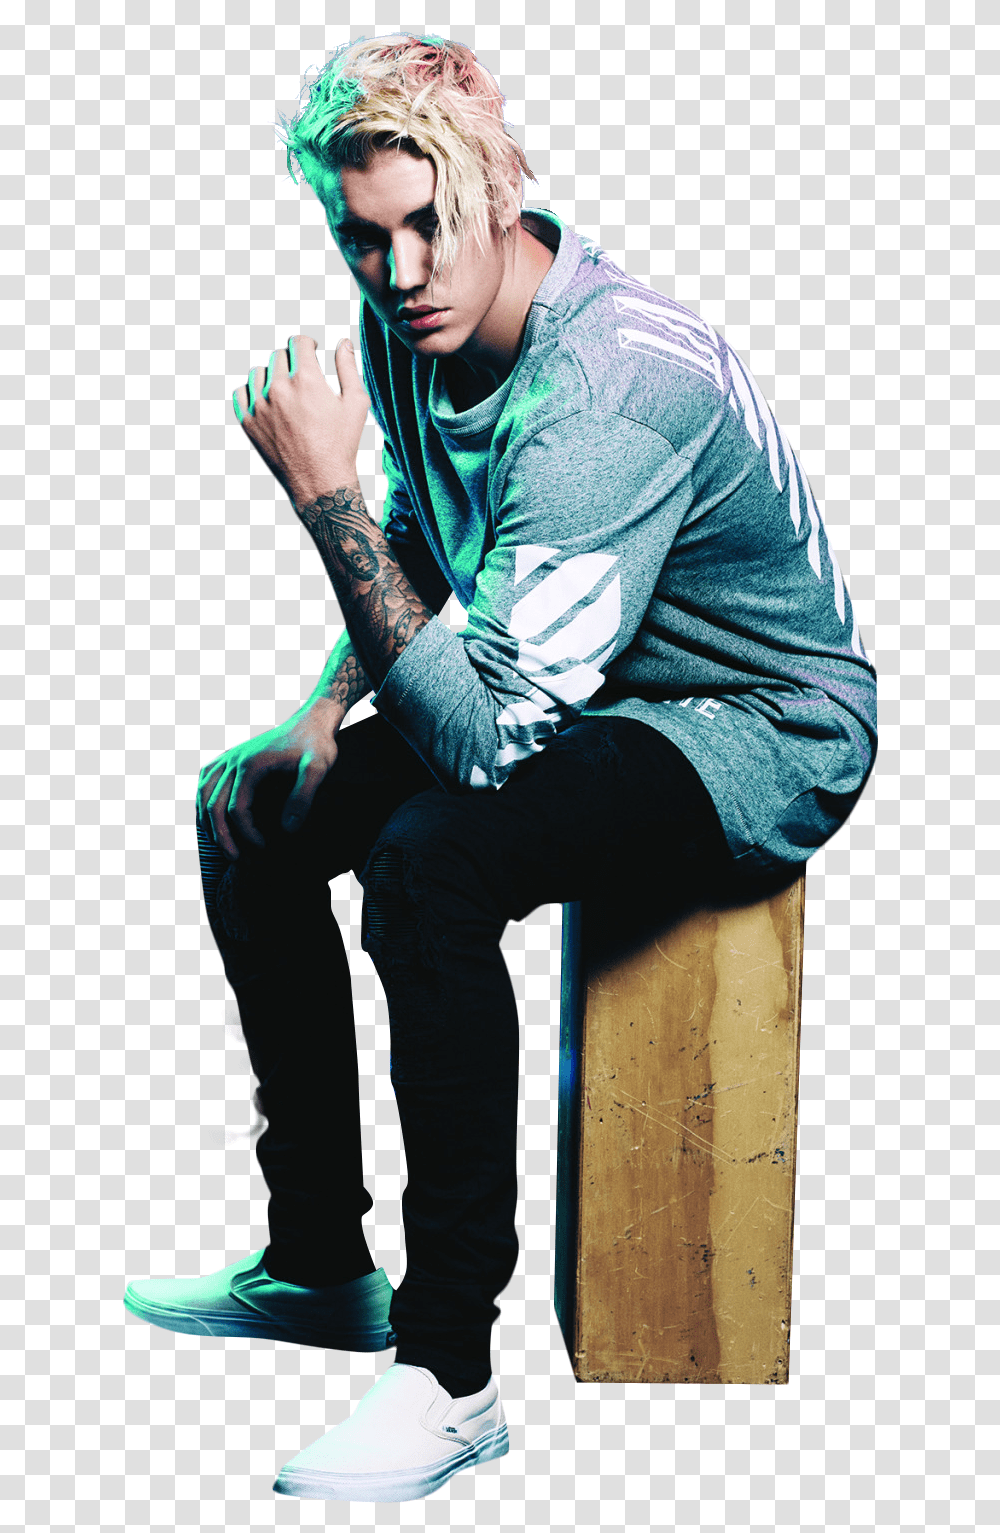 Justin Bieber Green Light Image For Justin Bieber Hd Wallpaper 2020, Skin, Shoe, Footwear, Clothing Transparent Png